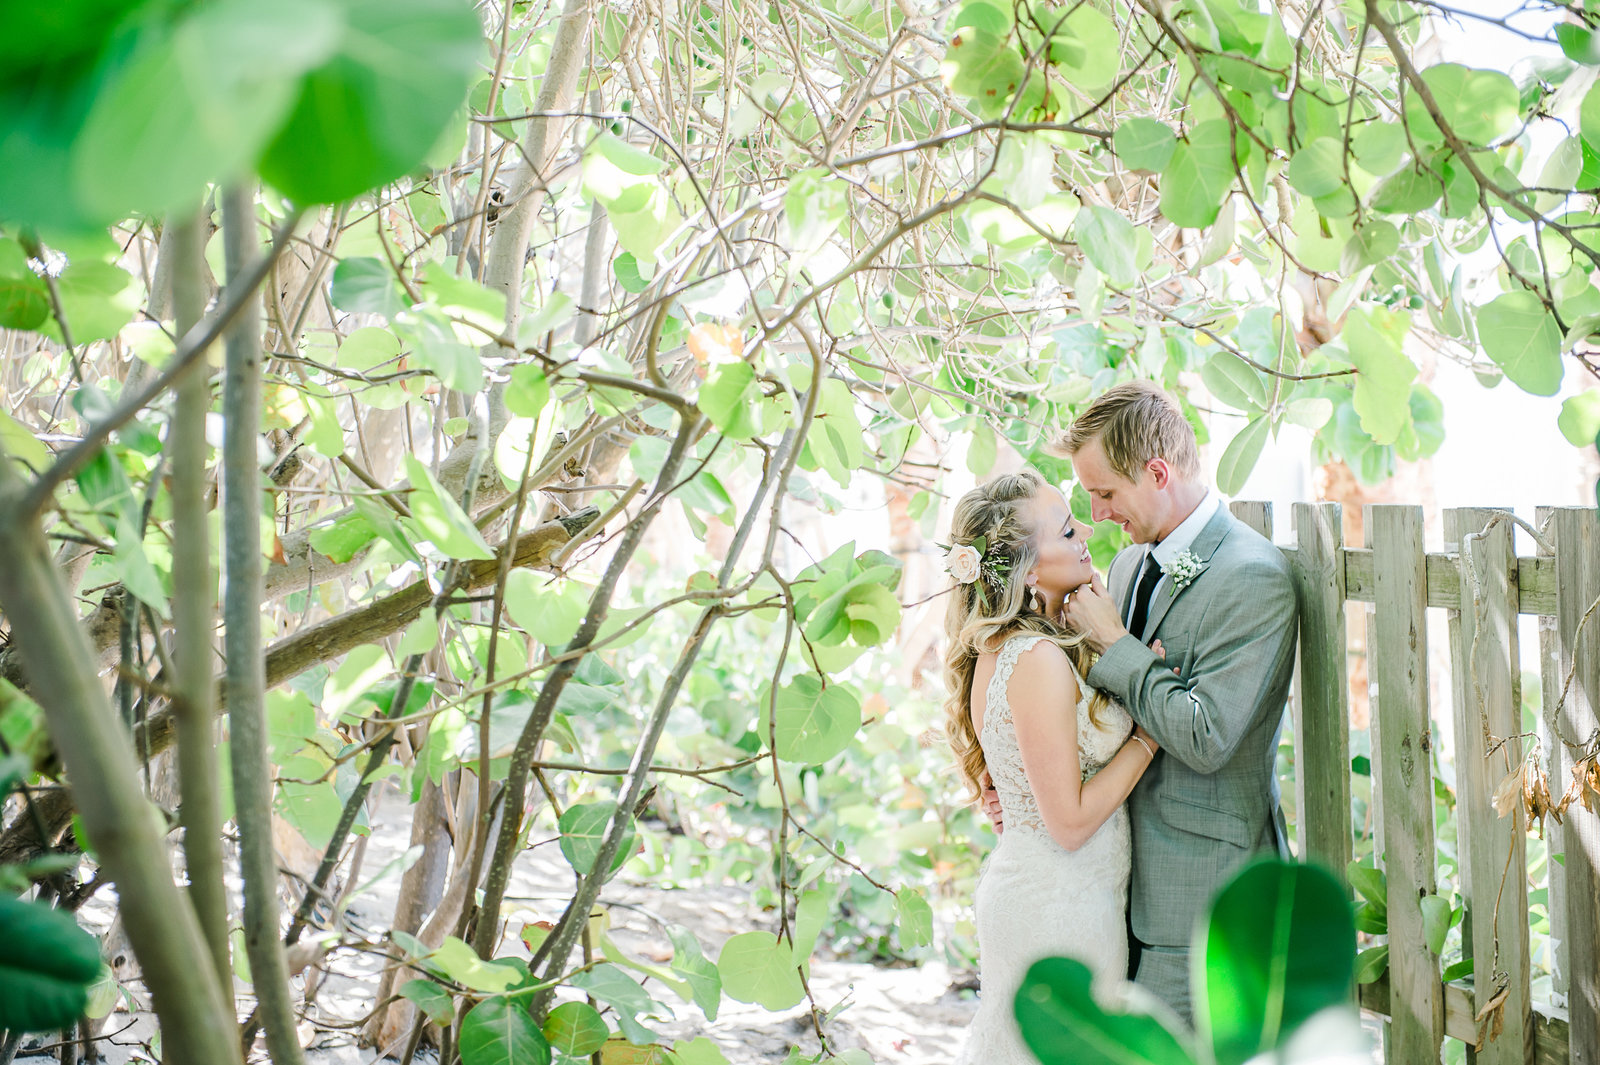 Secret Garden Wedding - Hilton Singer Island Wedding - Palm Beach Wedding Photography by Palm Beach Photography, Inc.